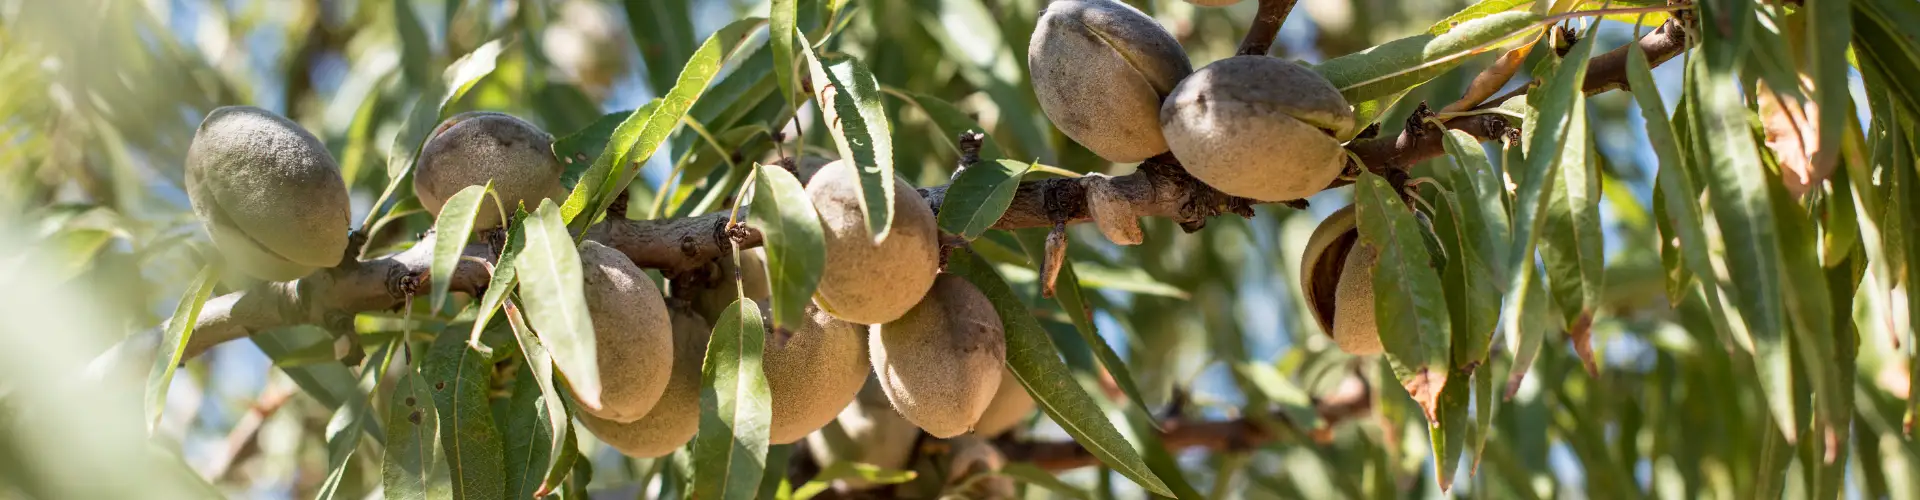 Biodiversity Almond